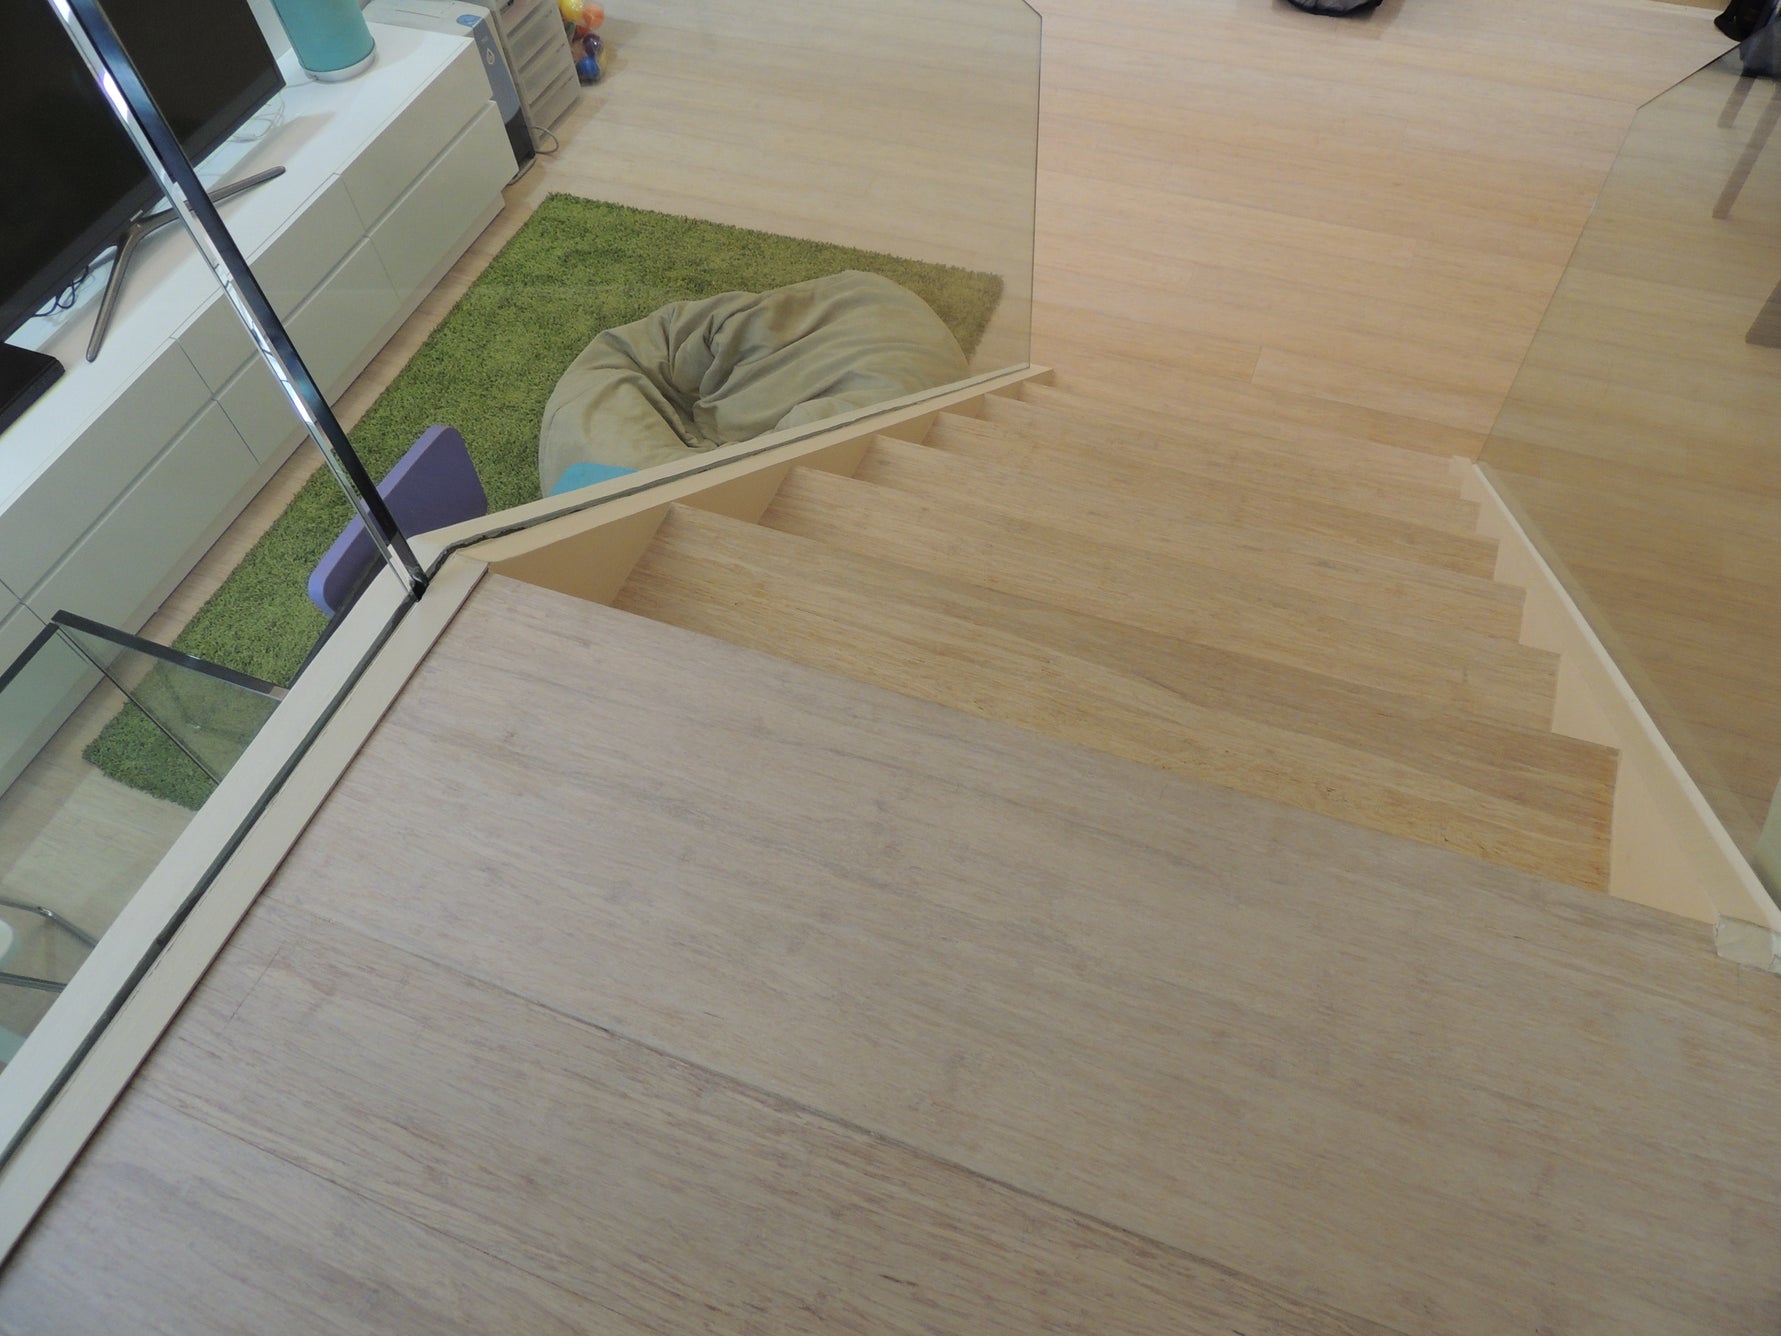 VERDEE Strand Woven Bamboo Flooring - COLOUR Series (Cotton White) [$64.89/sqft; 22.5sqft/box]